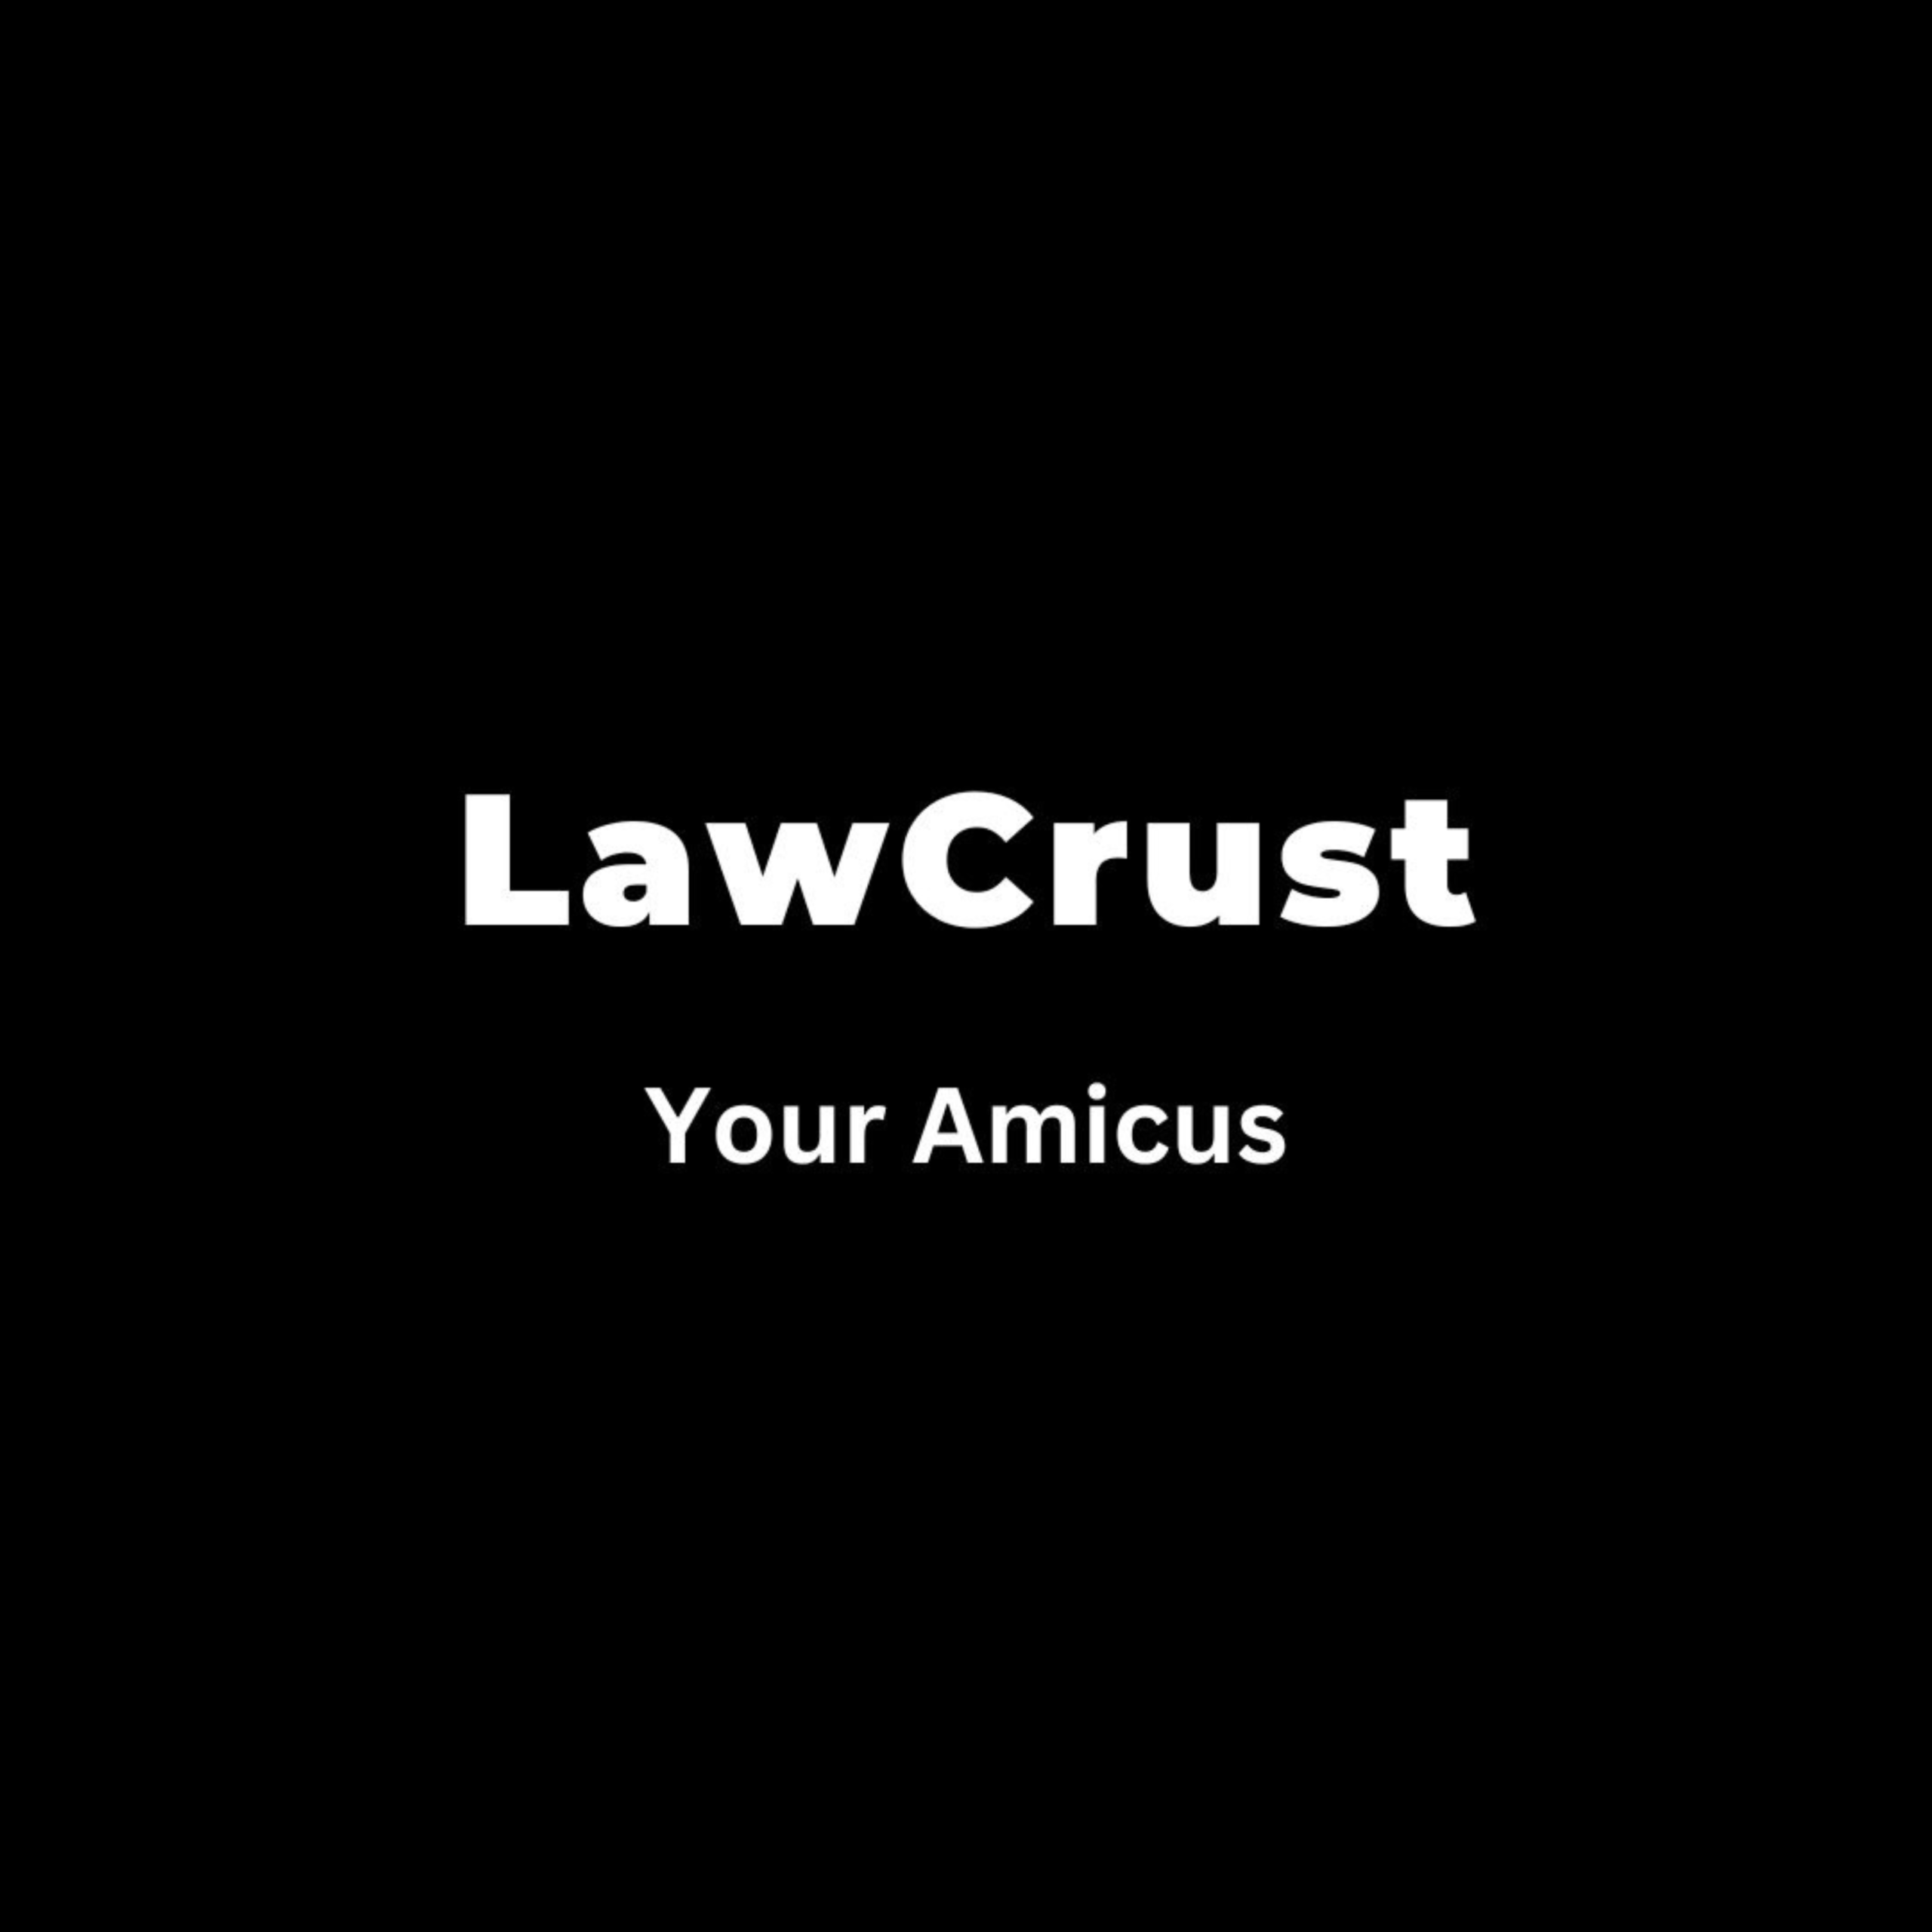 lawcrust logo.png